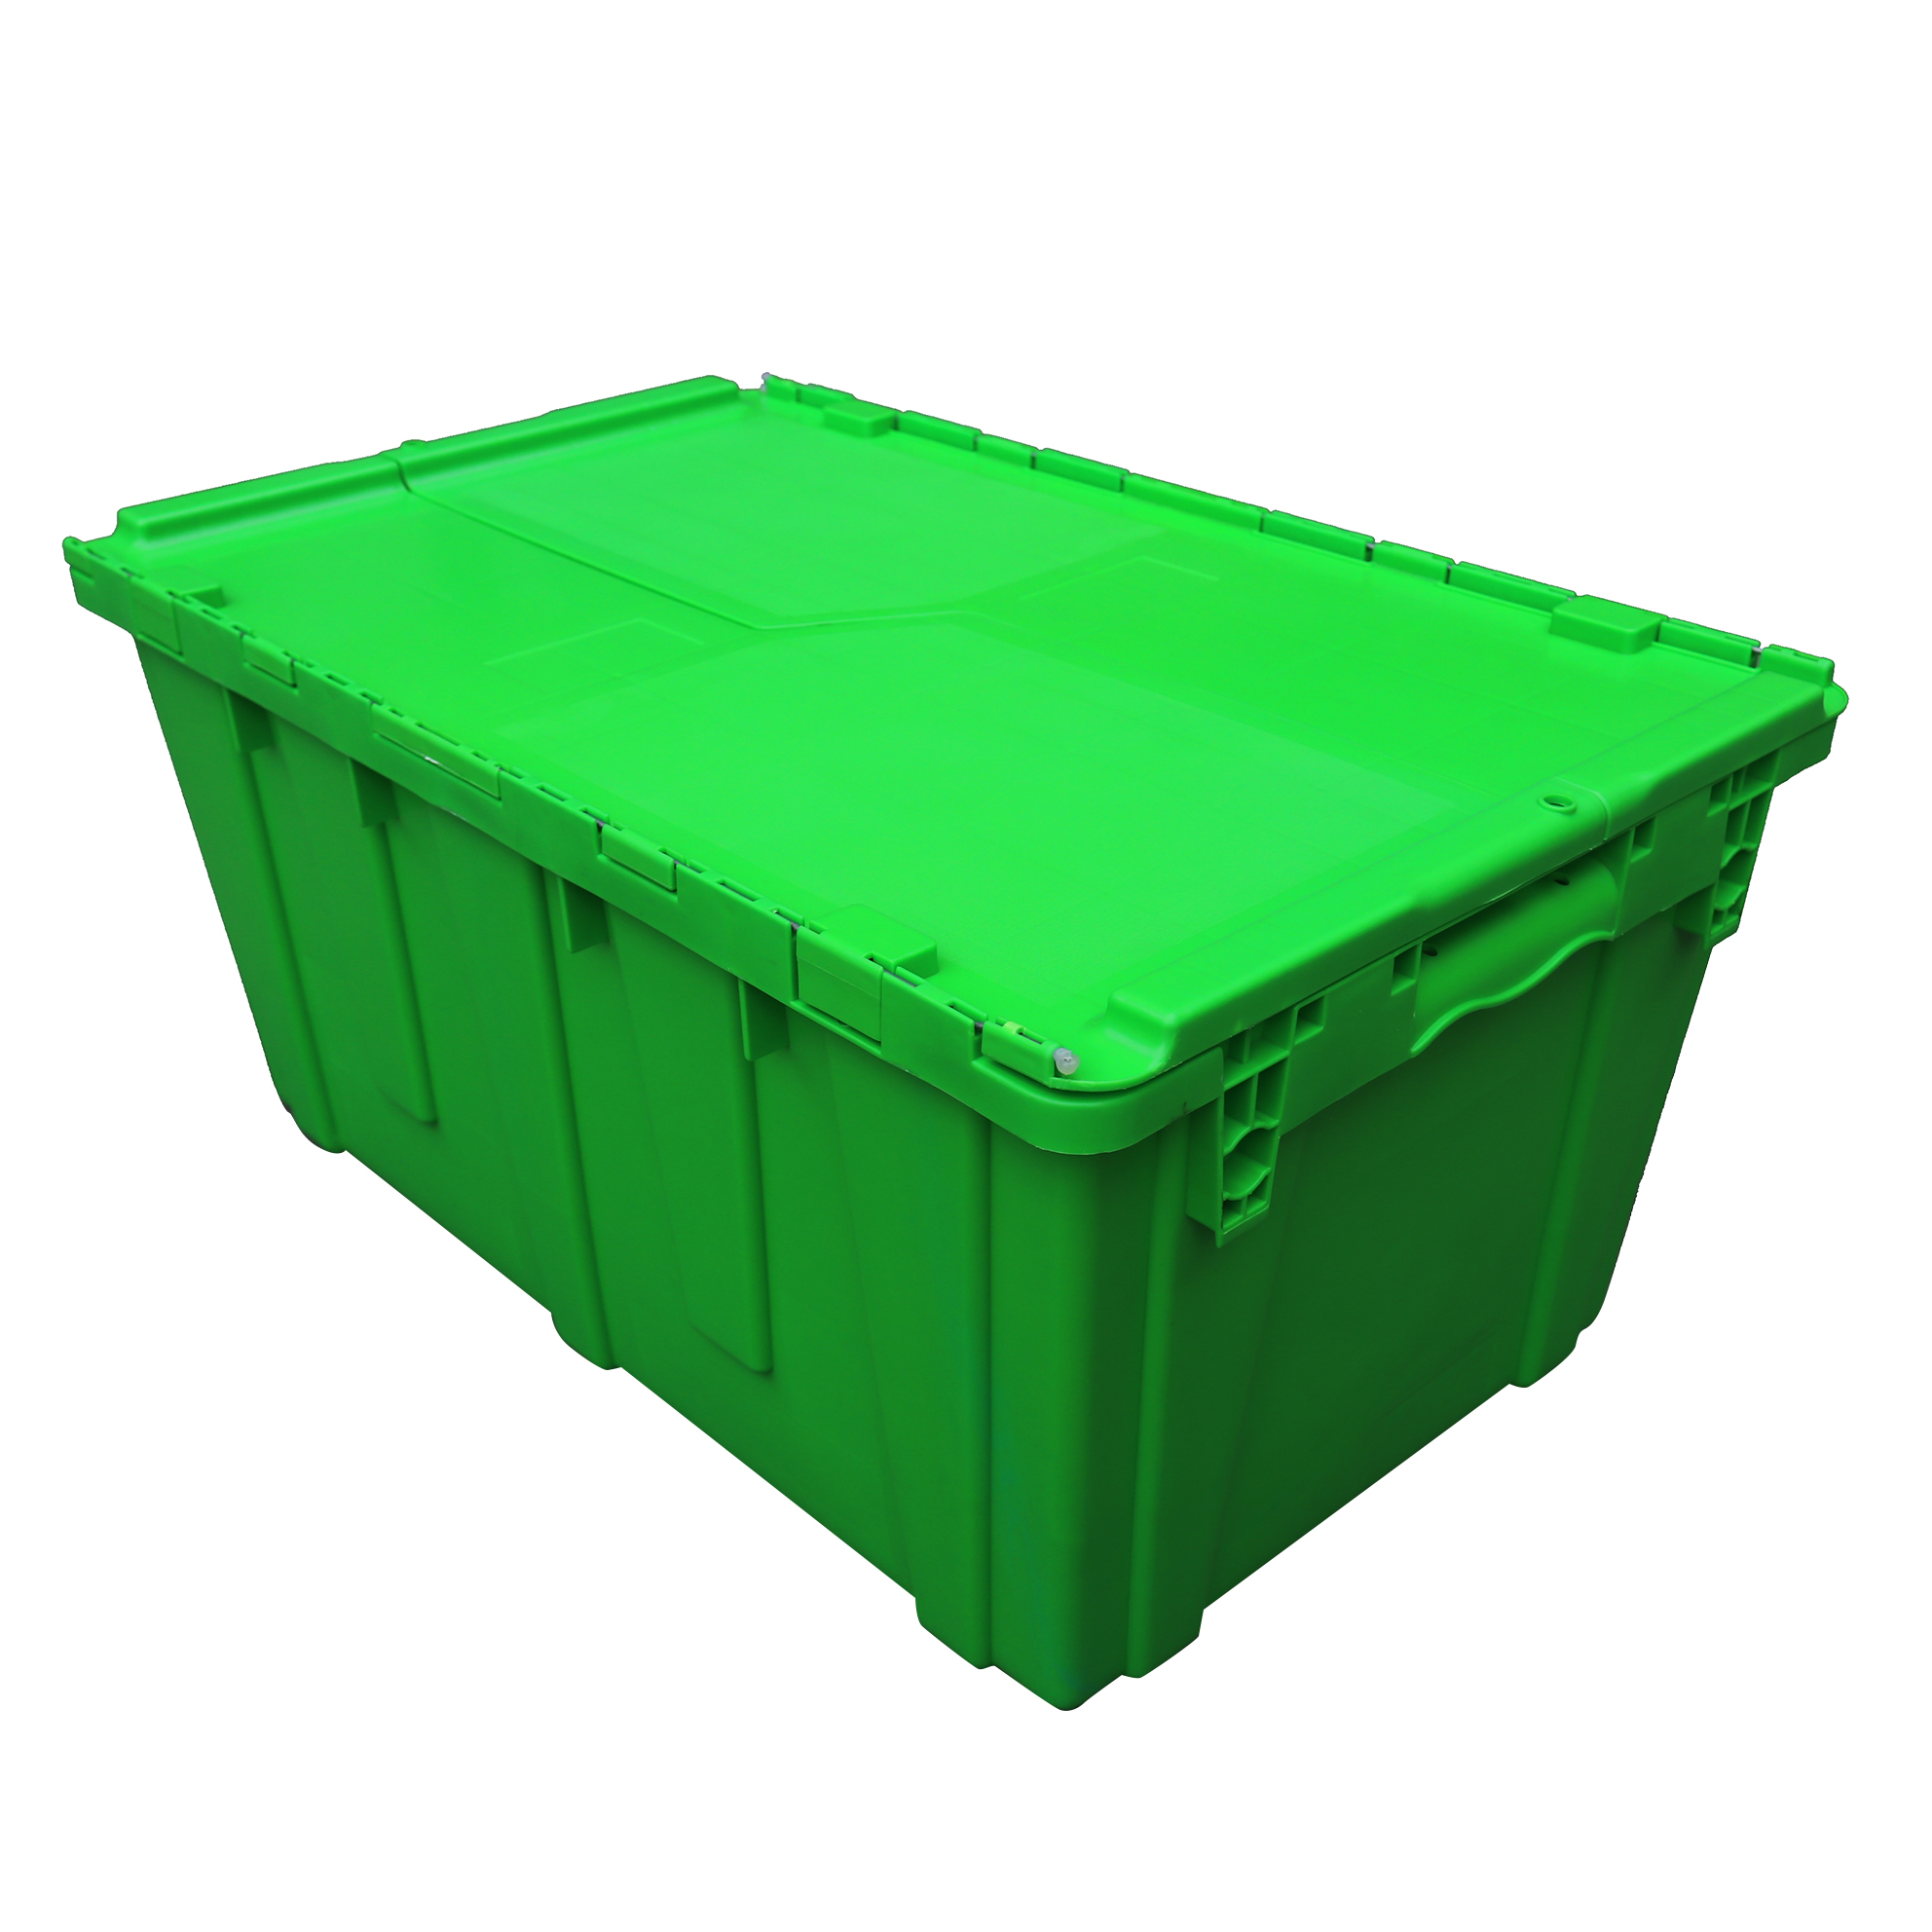 https://www.plastic-crate.com/wp-content/uploads/2022/03/moving-bin-on-wheels-5.jpg